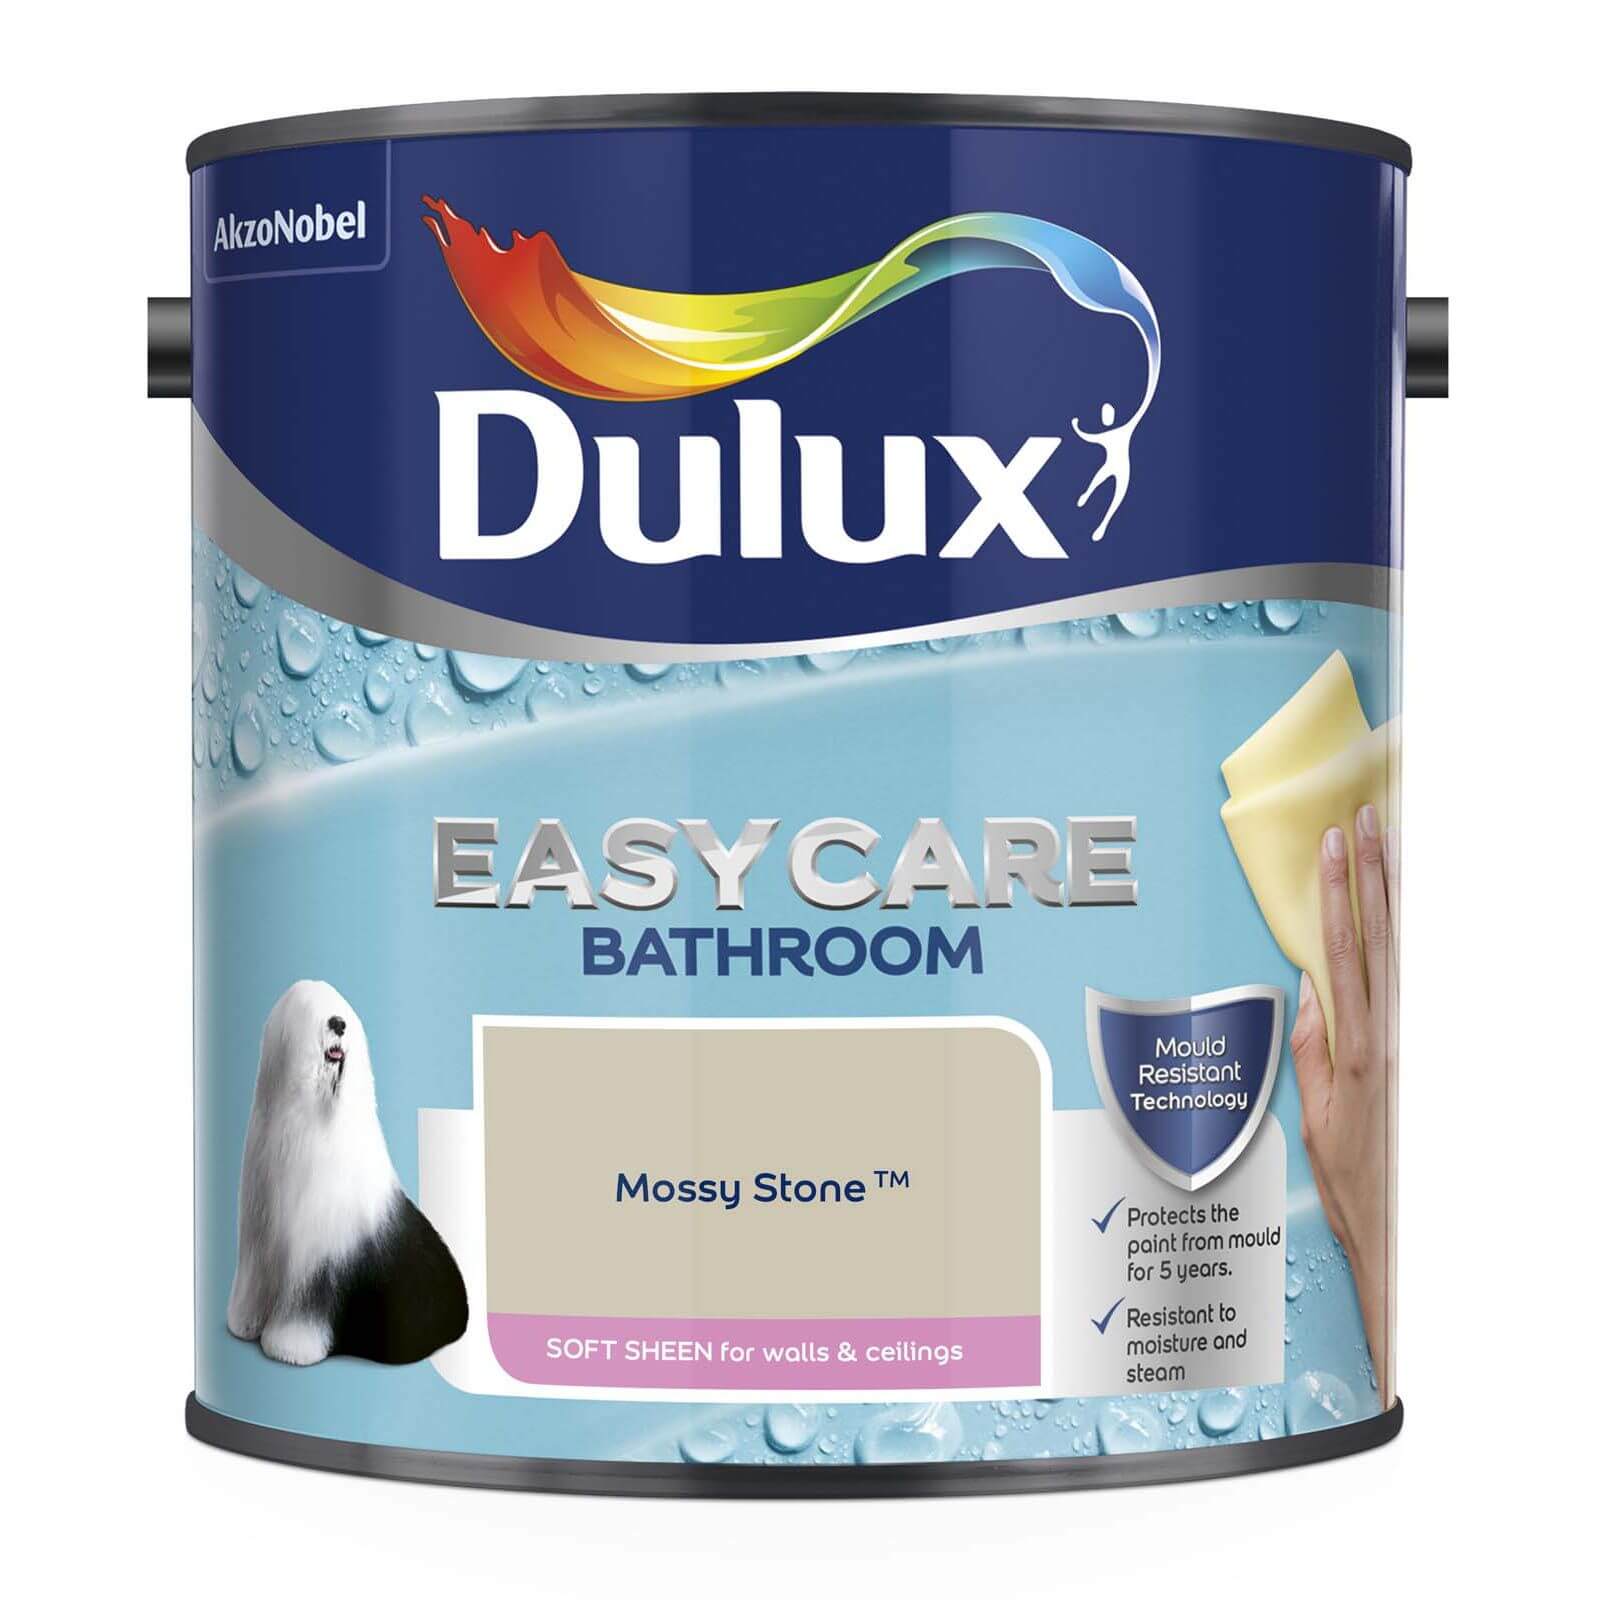 Dulux Easycare Bathroom Mossy Stone Soft Sheen Paint - 2.5L